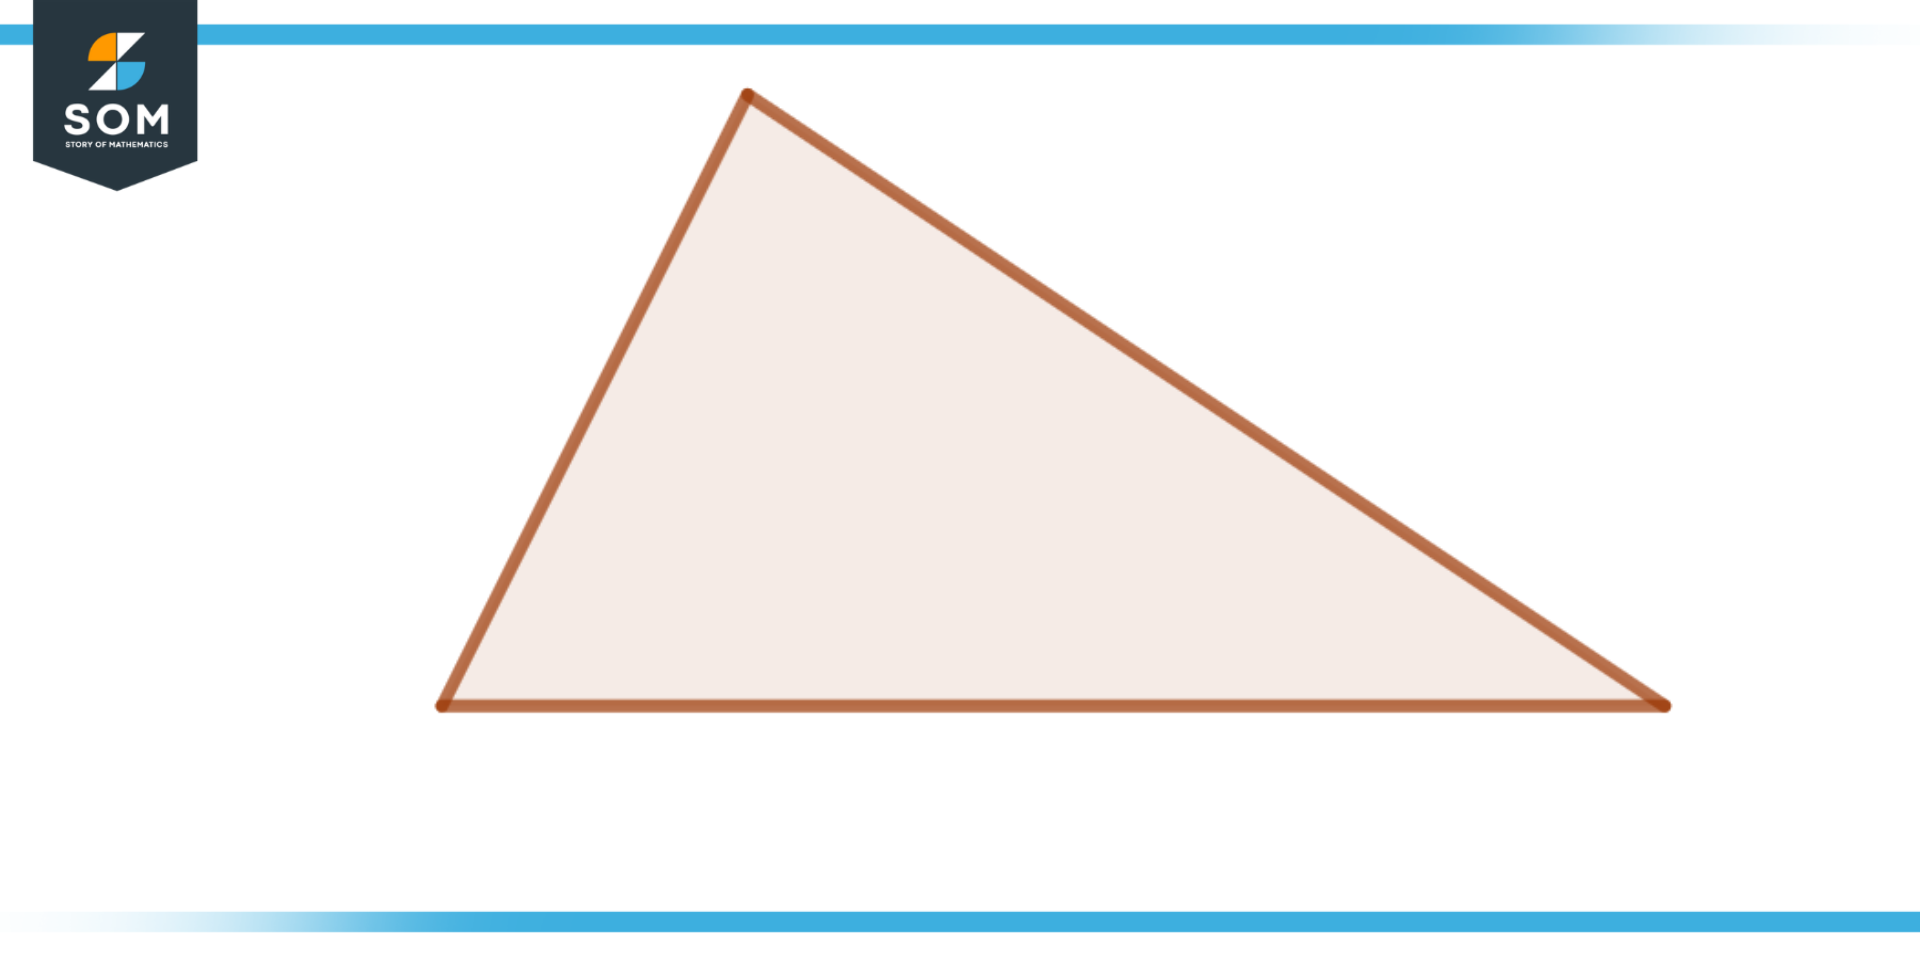 Scalene Triangle an irregular Polygon